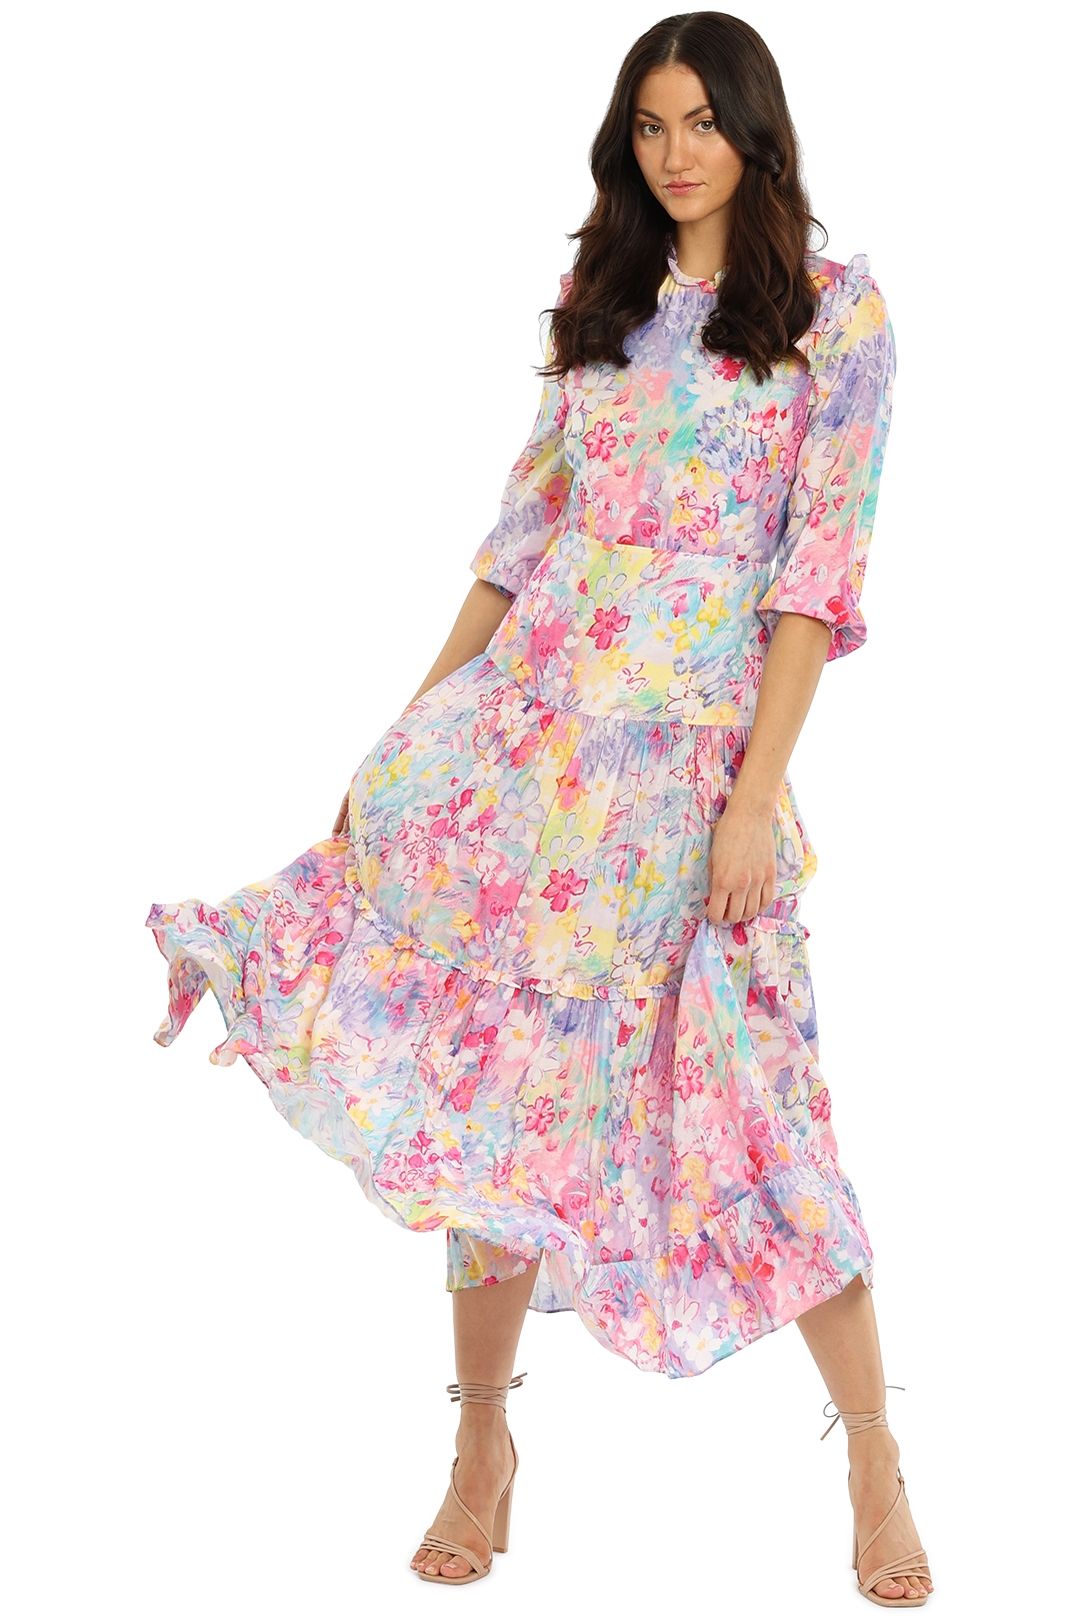 Hire Monet Dress in Floral | Rixo London | GlamCorner